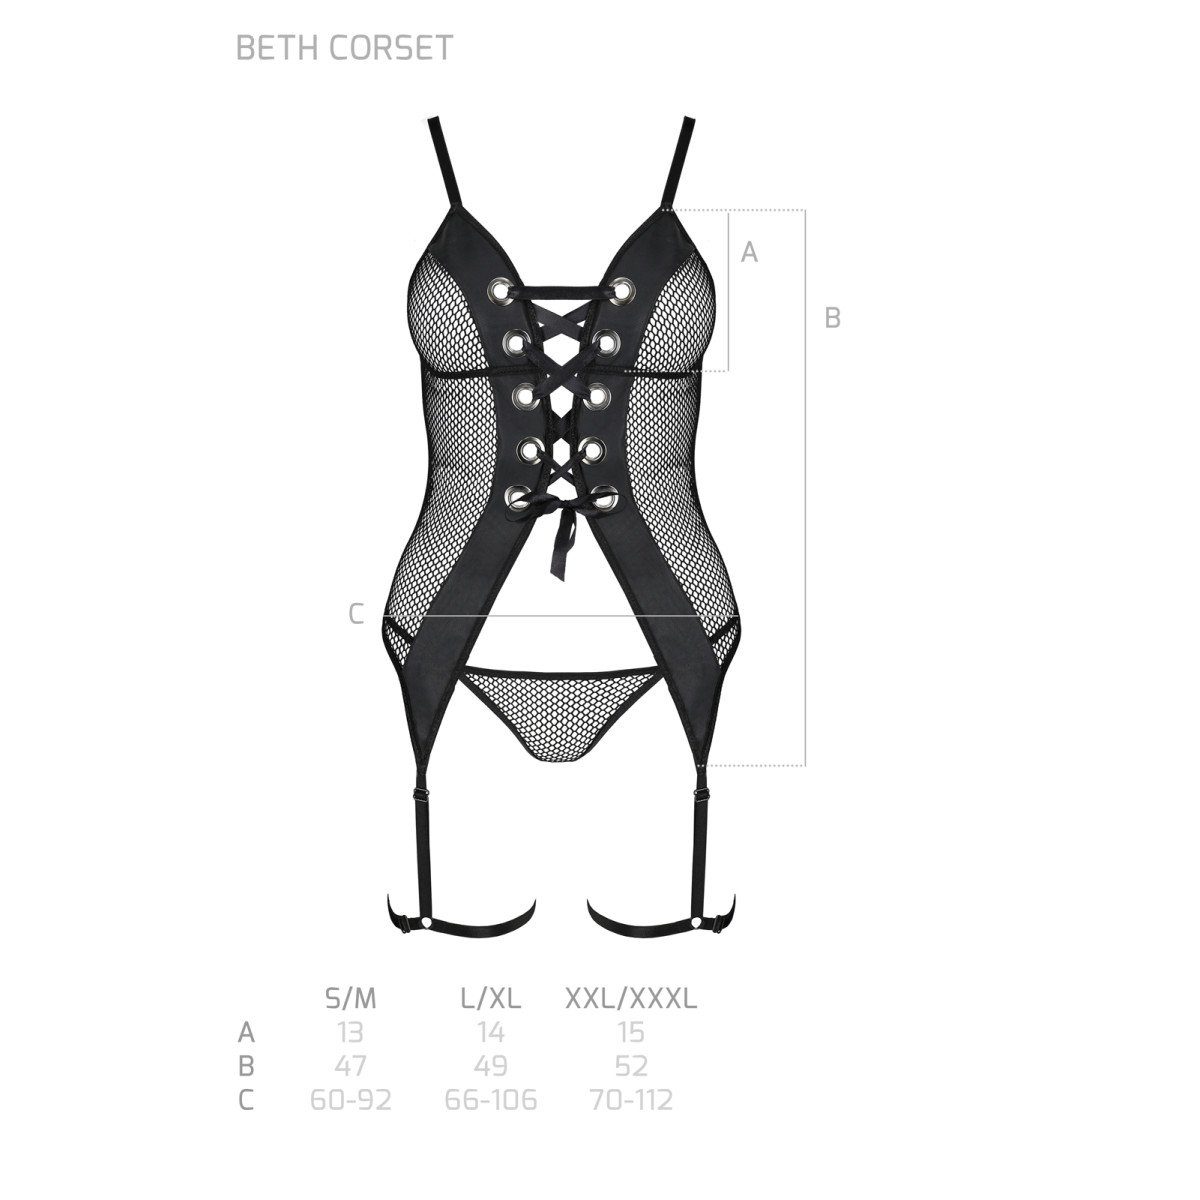 Passion-Exklusiv Corsage Beth (L/XL,S/M,XXL) corset thong PE & black 